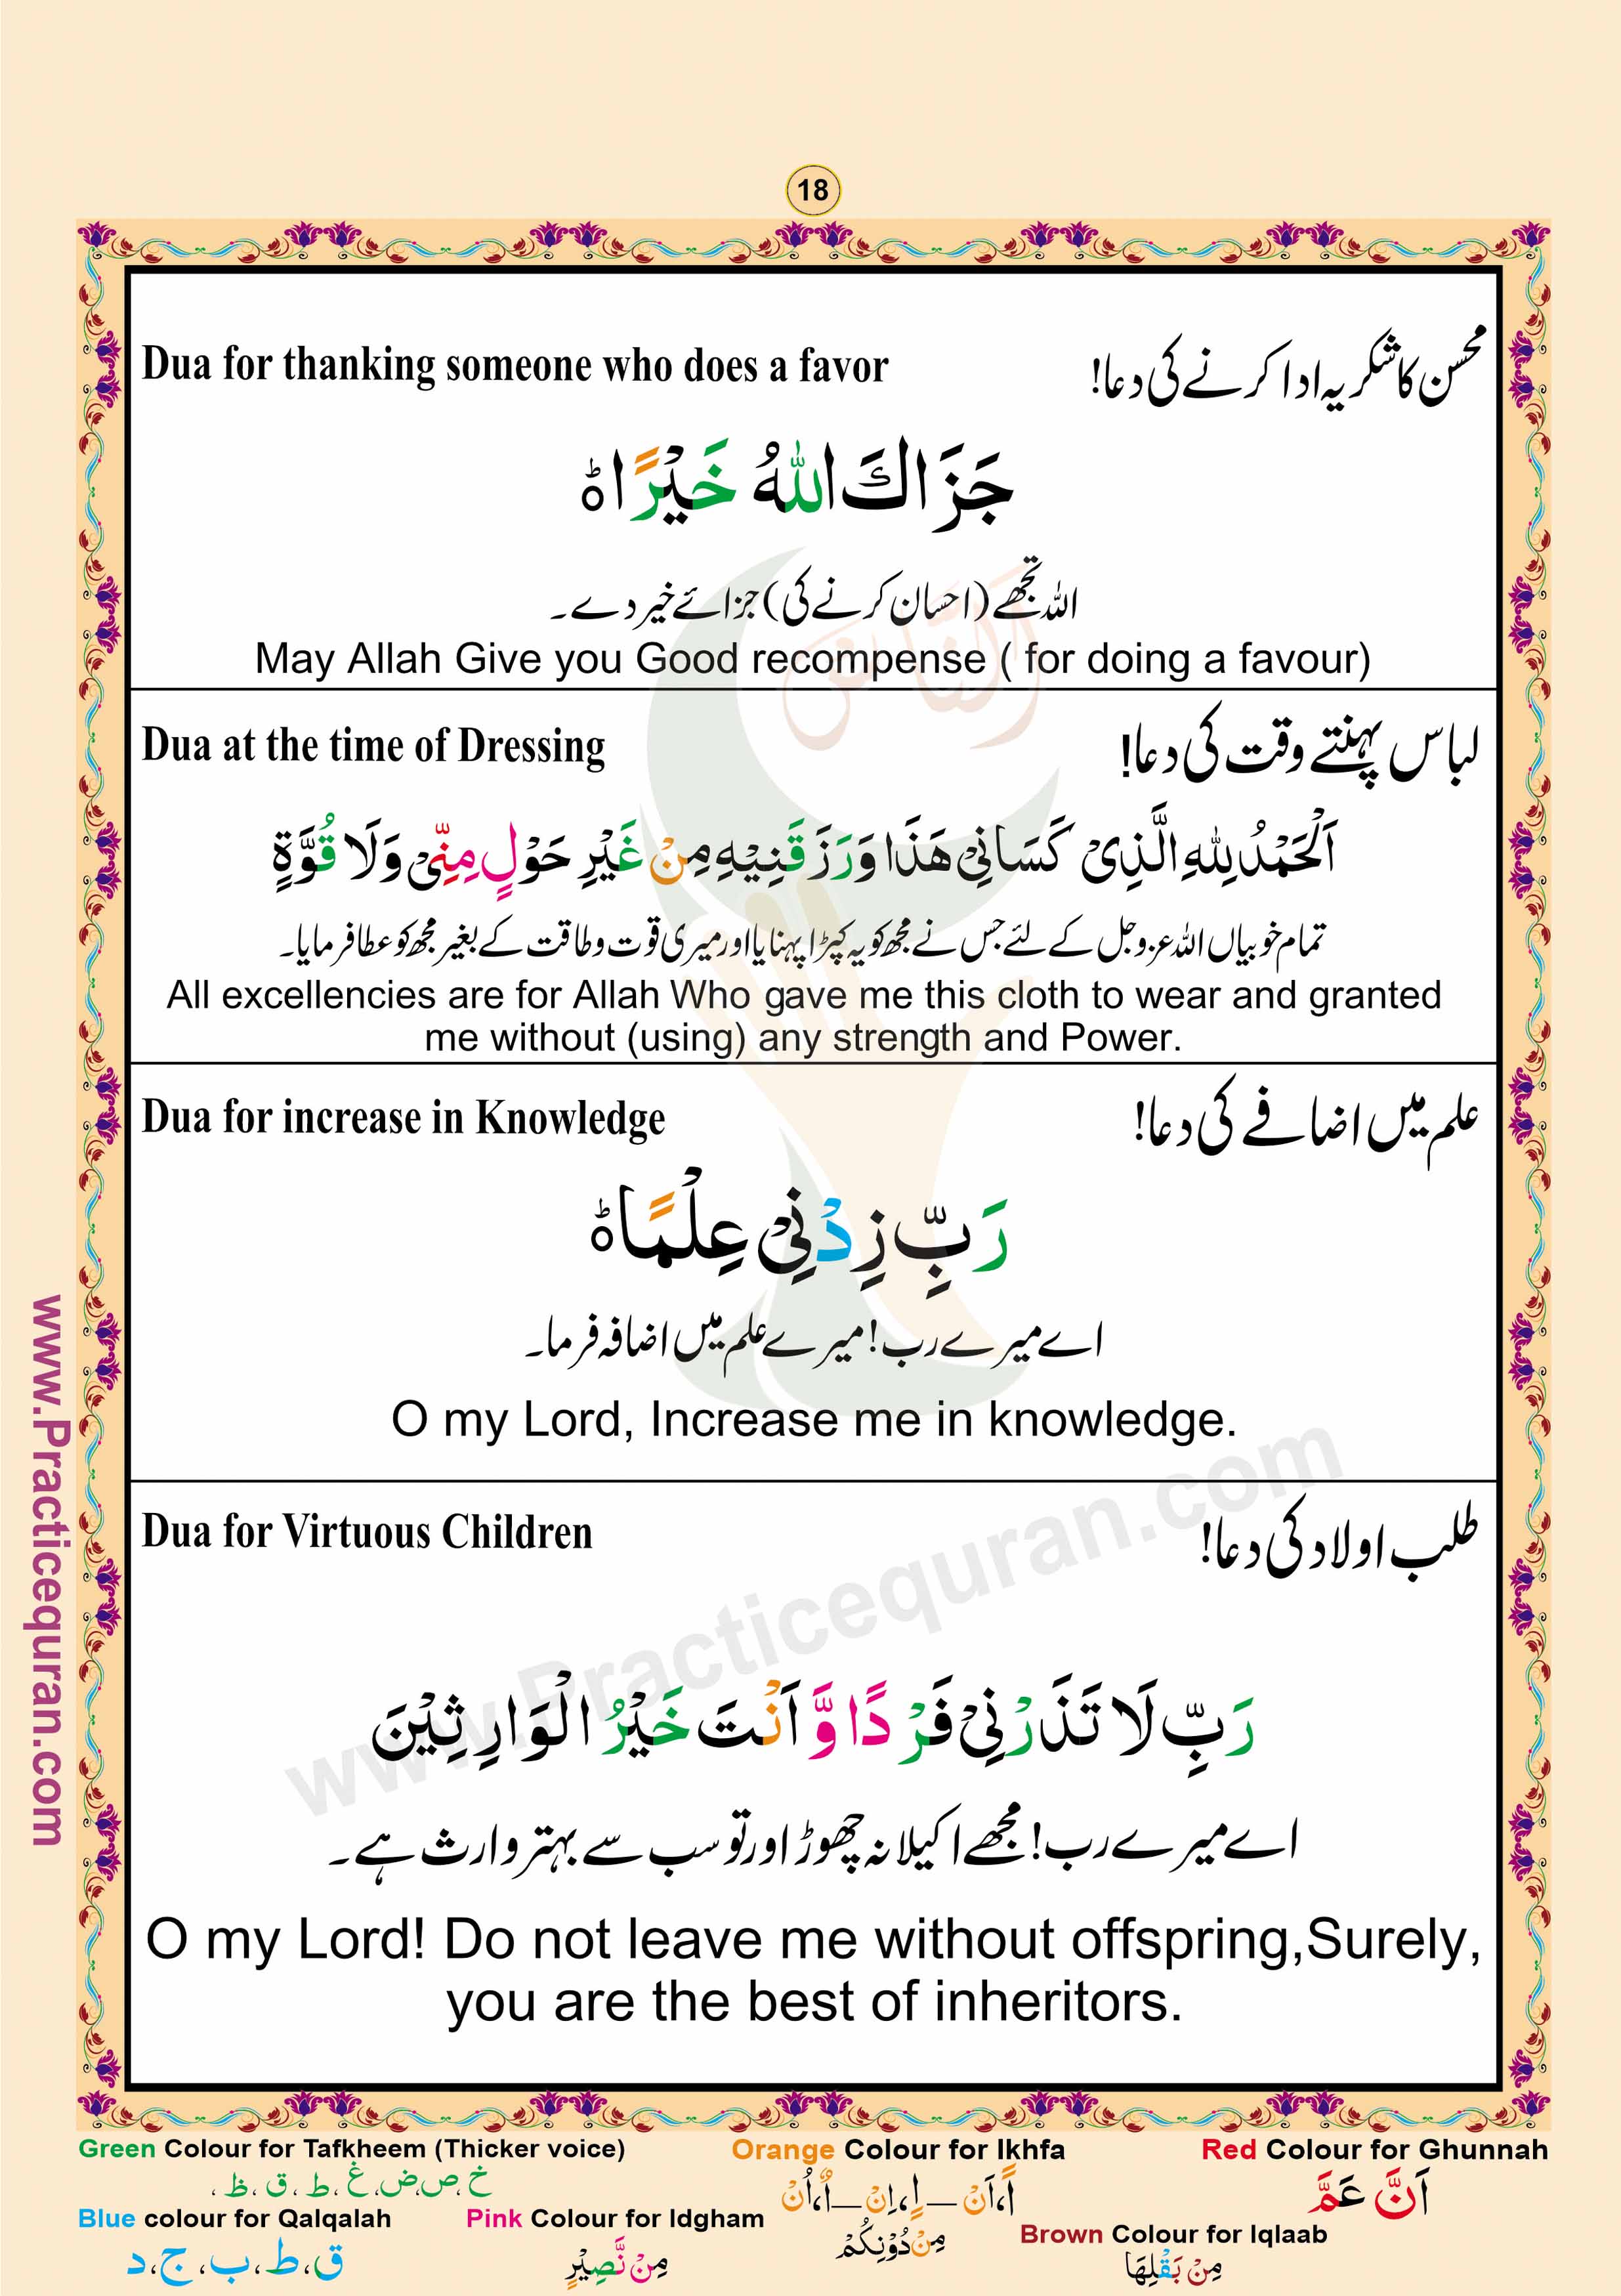 Read Namaz (Salah) Page No 18, Practice Quran